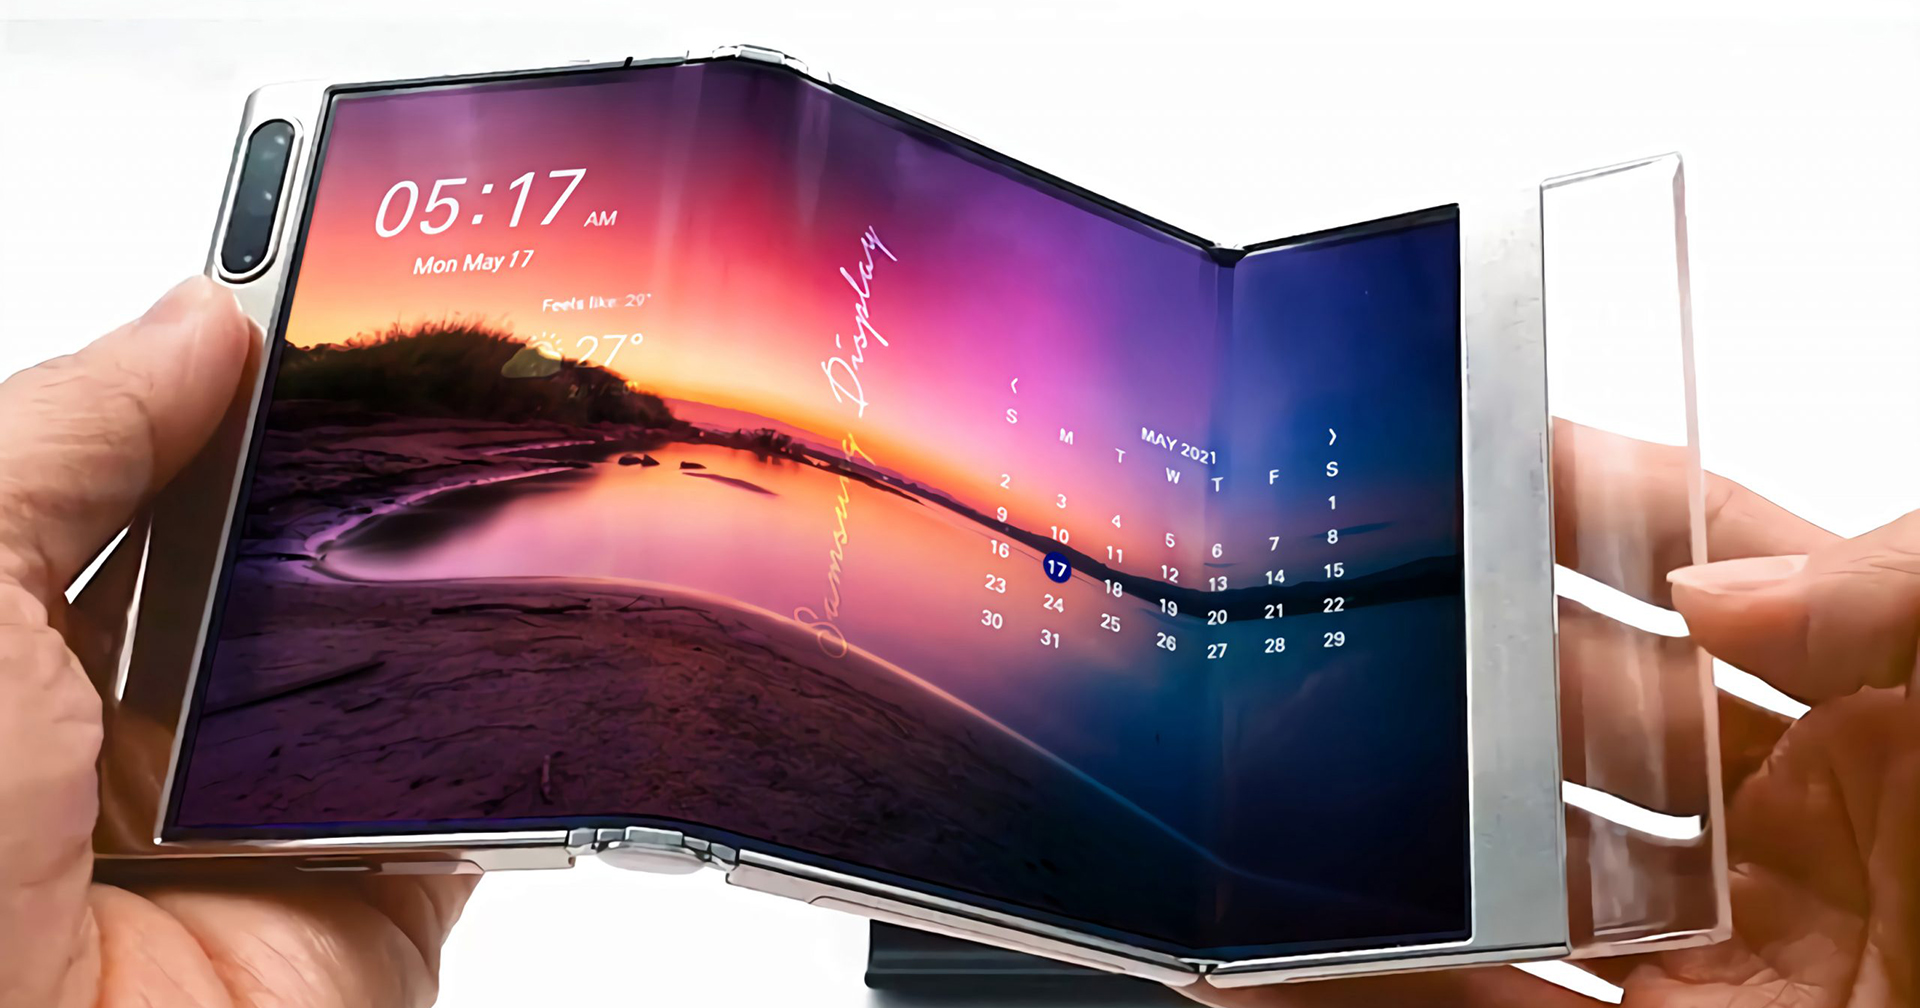 Samsung โชว์เทคโนโลยีจอ OLED พับ 2 ท่อน และฝังกล้องใต้จอ ในงาน Display Week 2021